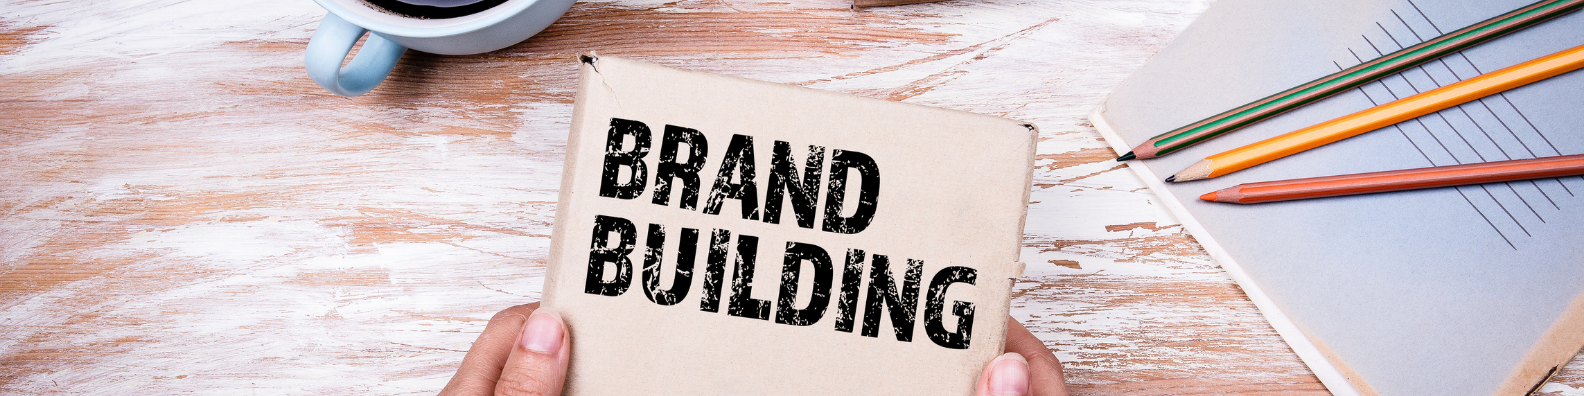 Brand Building Marketing